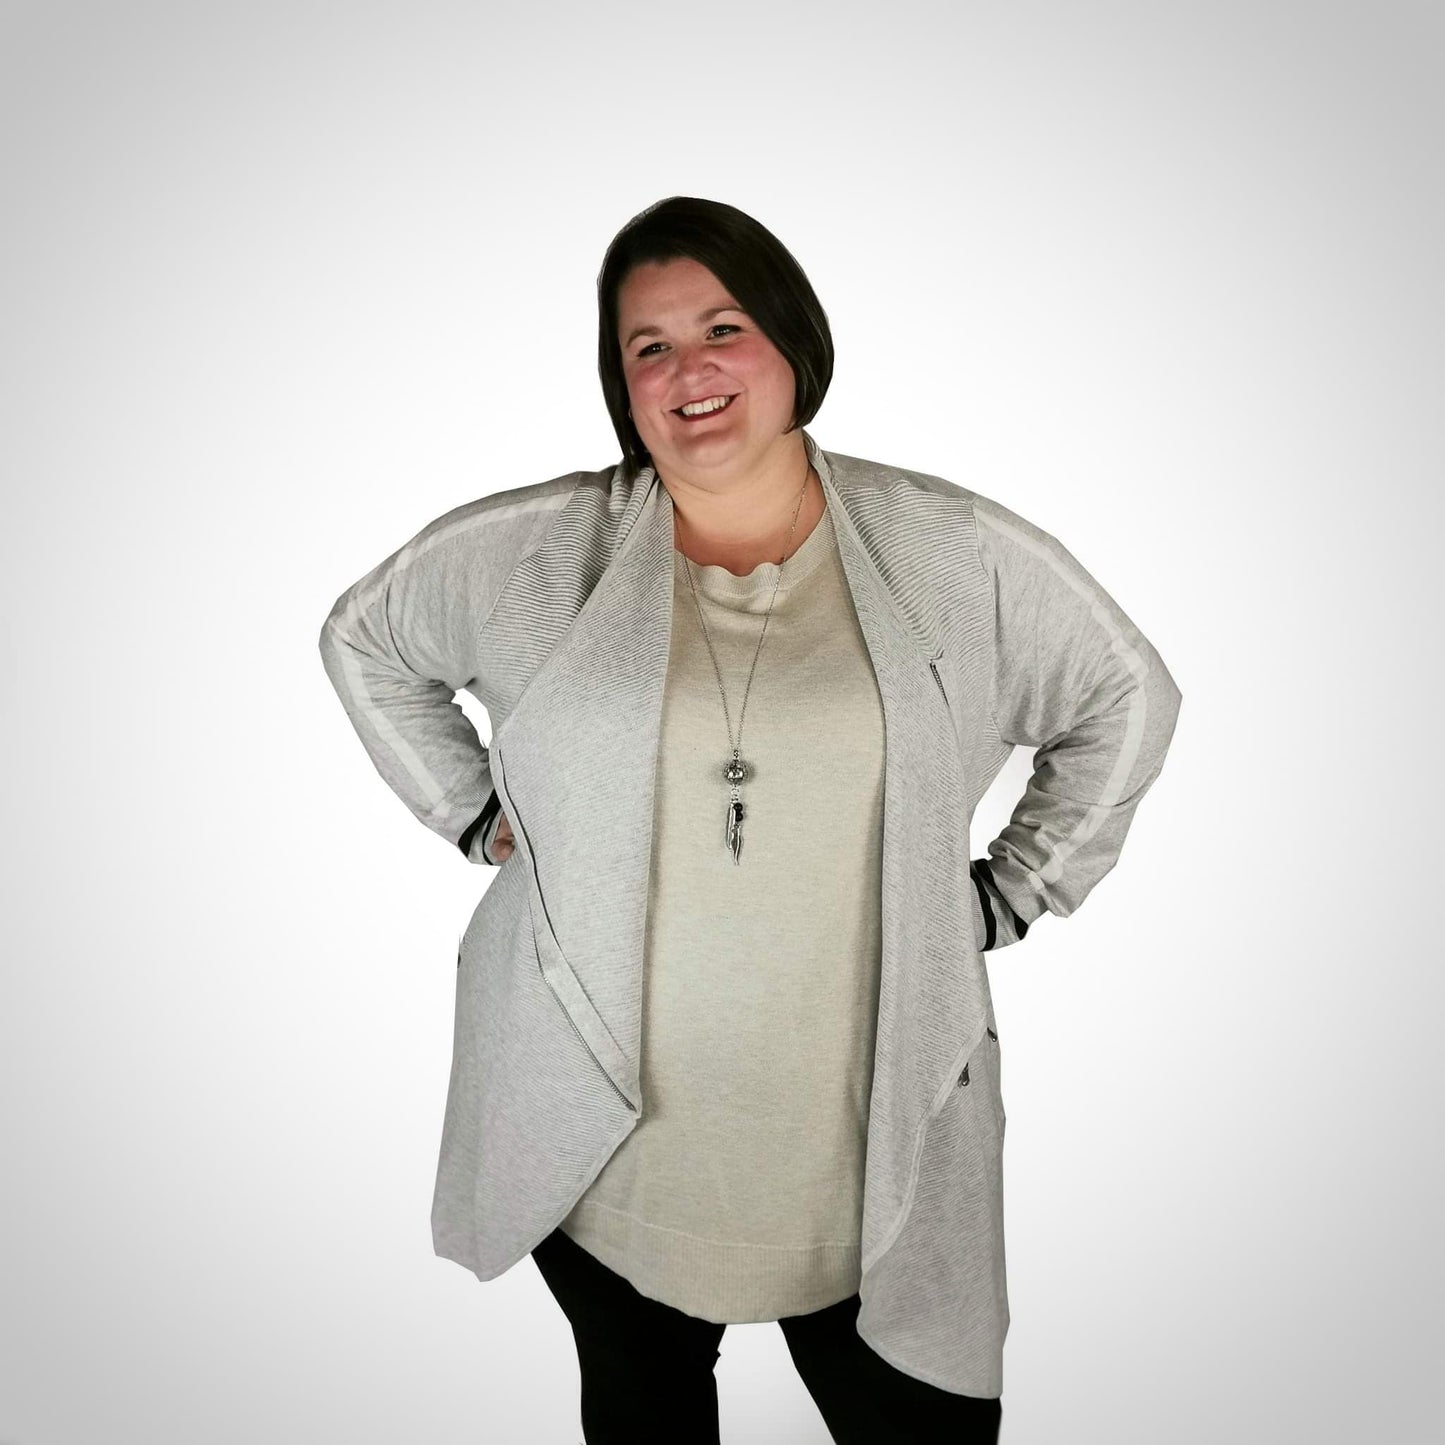 Asymmetrical gray knit jacket